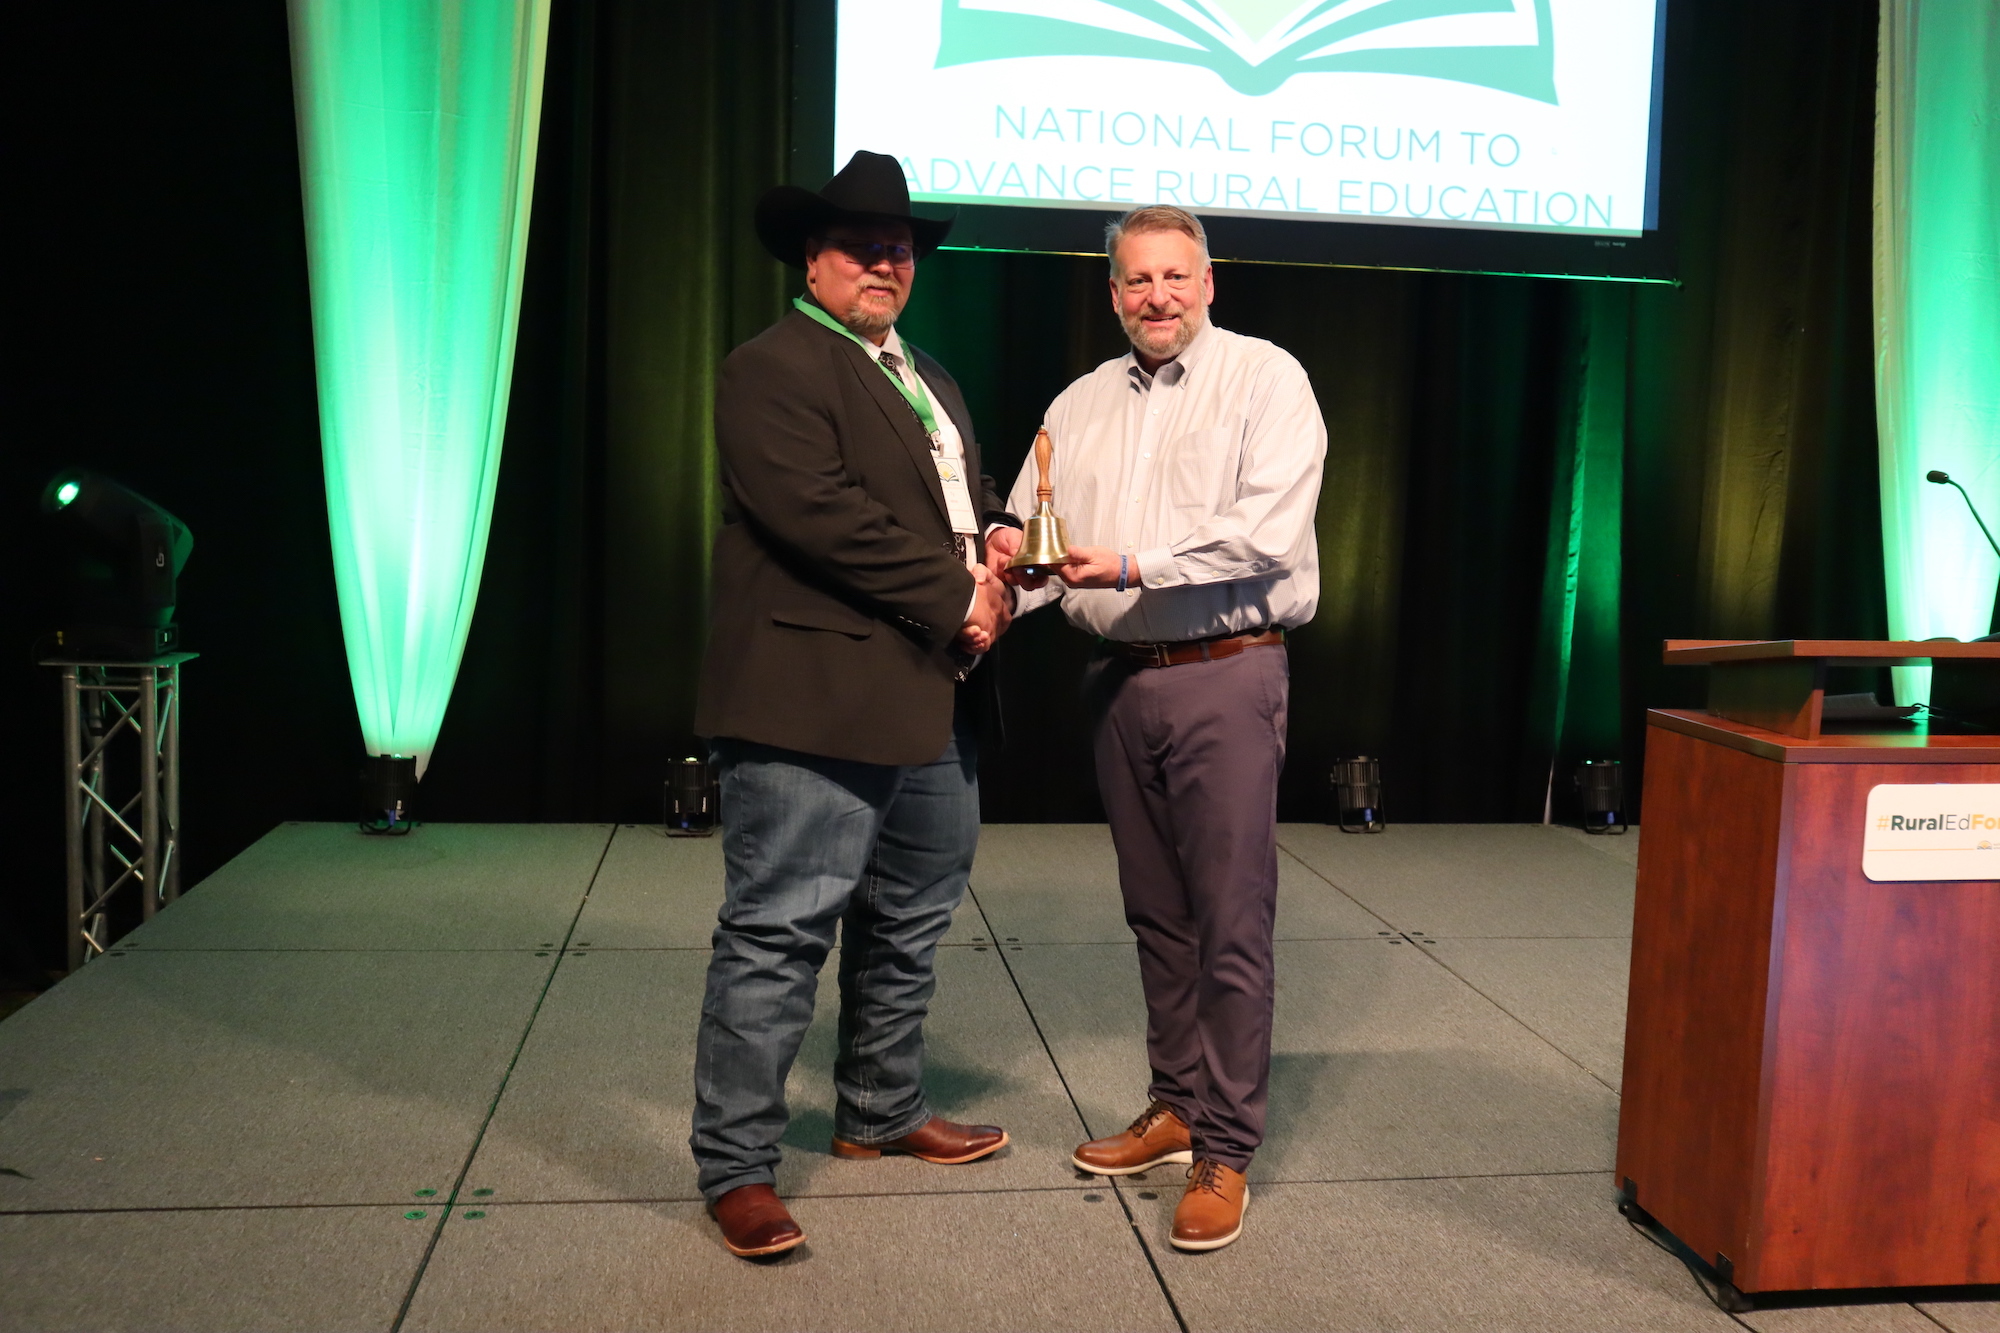 Ty receiving the National Rural Teacher of the Year Award from Dr. Allen Pratt